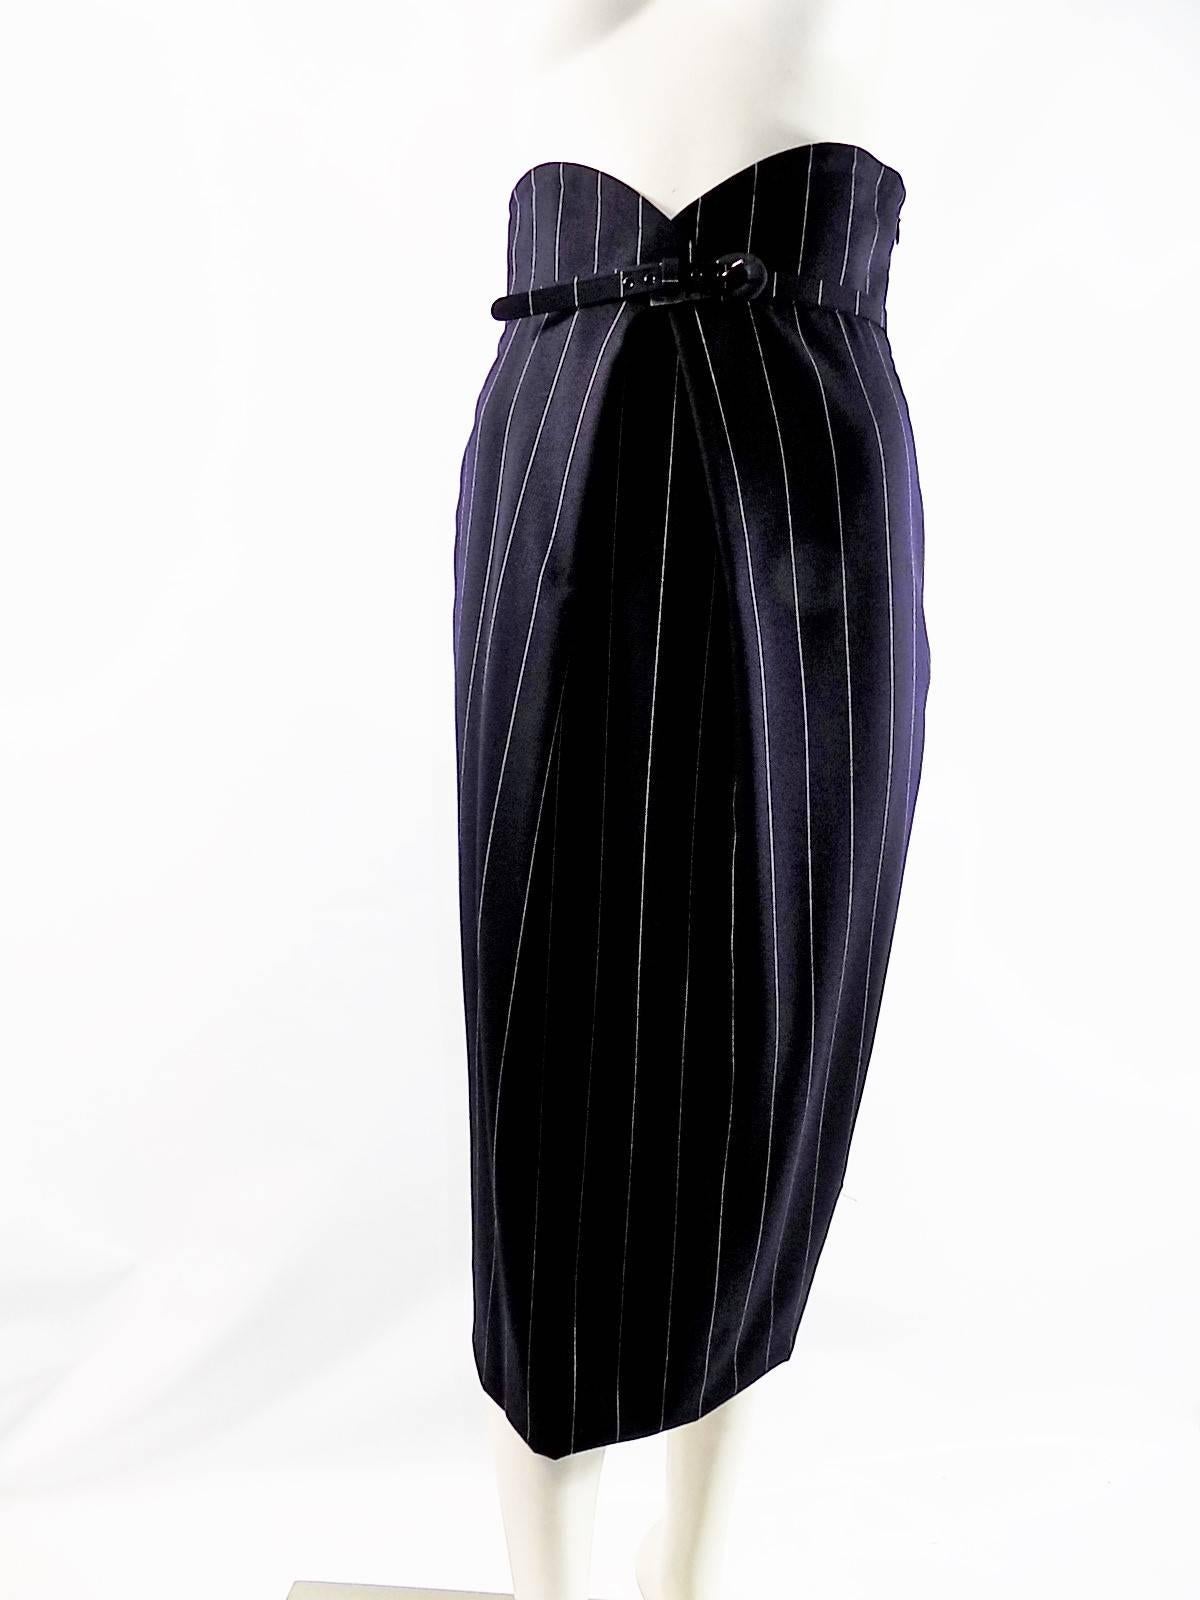  Marine Navy wool  pinstripe gaberdine  . Structured high waistline. Belted. Givenchy couture label, Circa 1990's. Pristine condition. Fully lined.
Waist 26